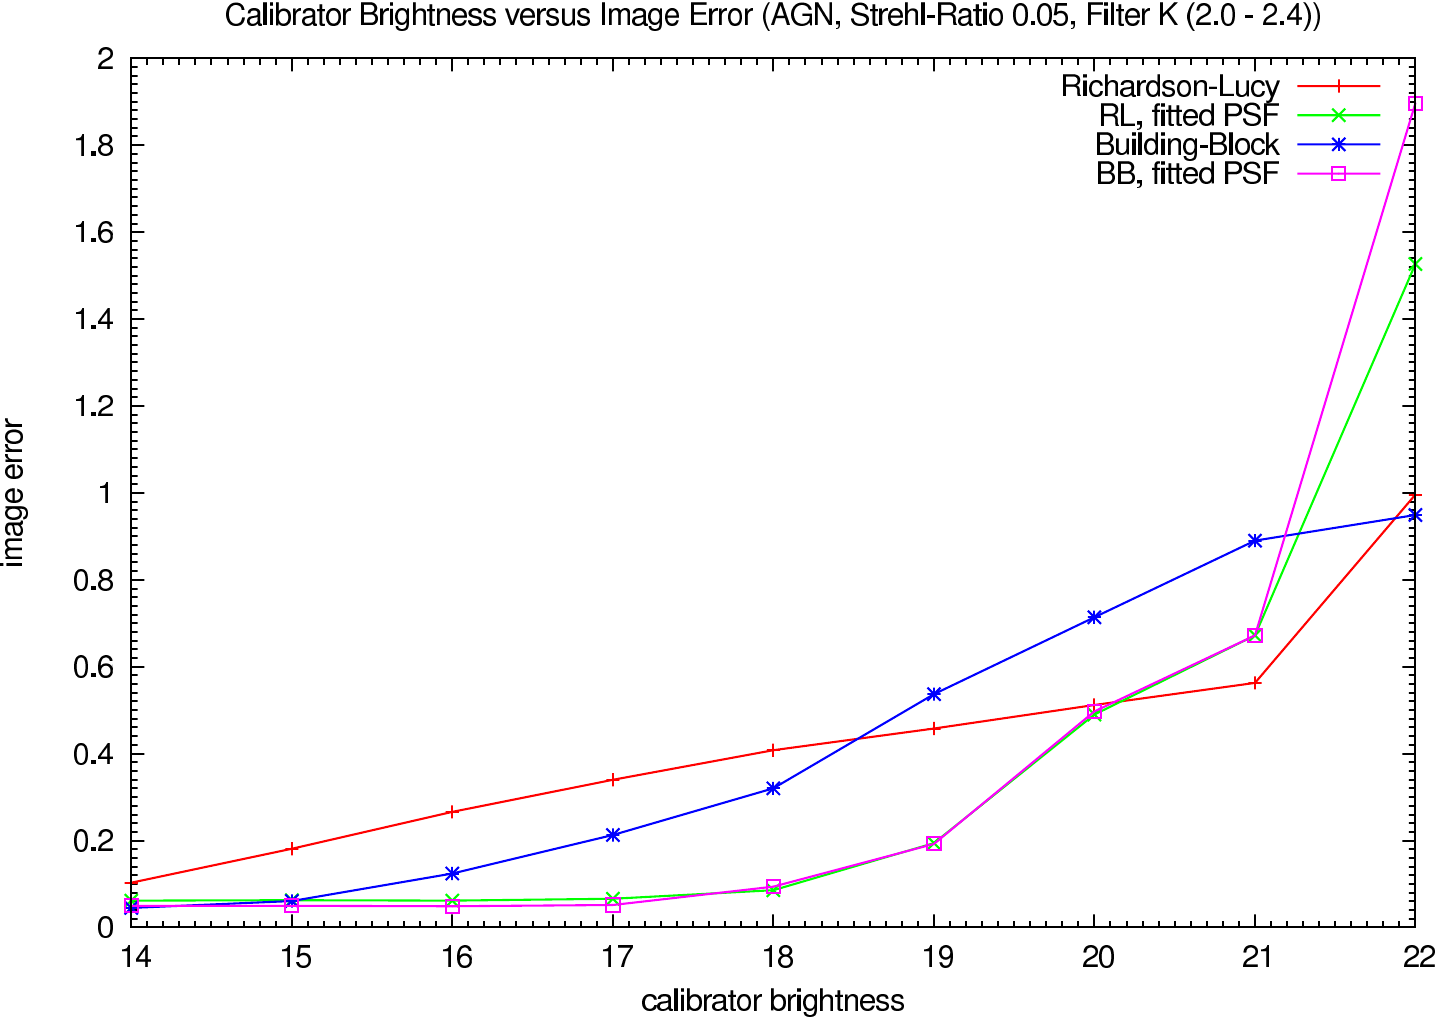 Image errors depending on the calibrator brightness, strehl ratio 0.05, K-Band